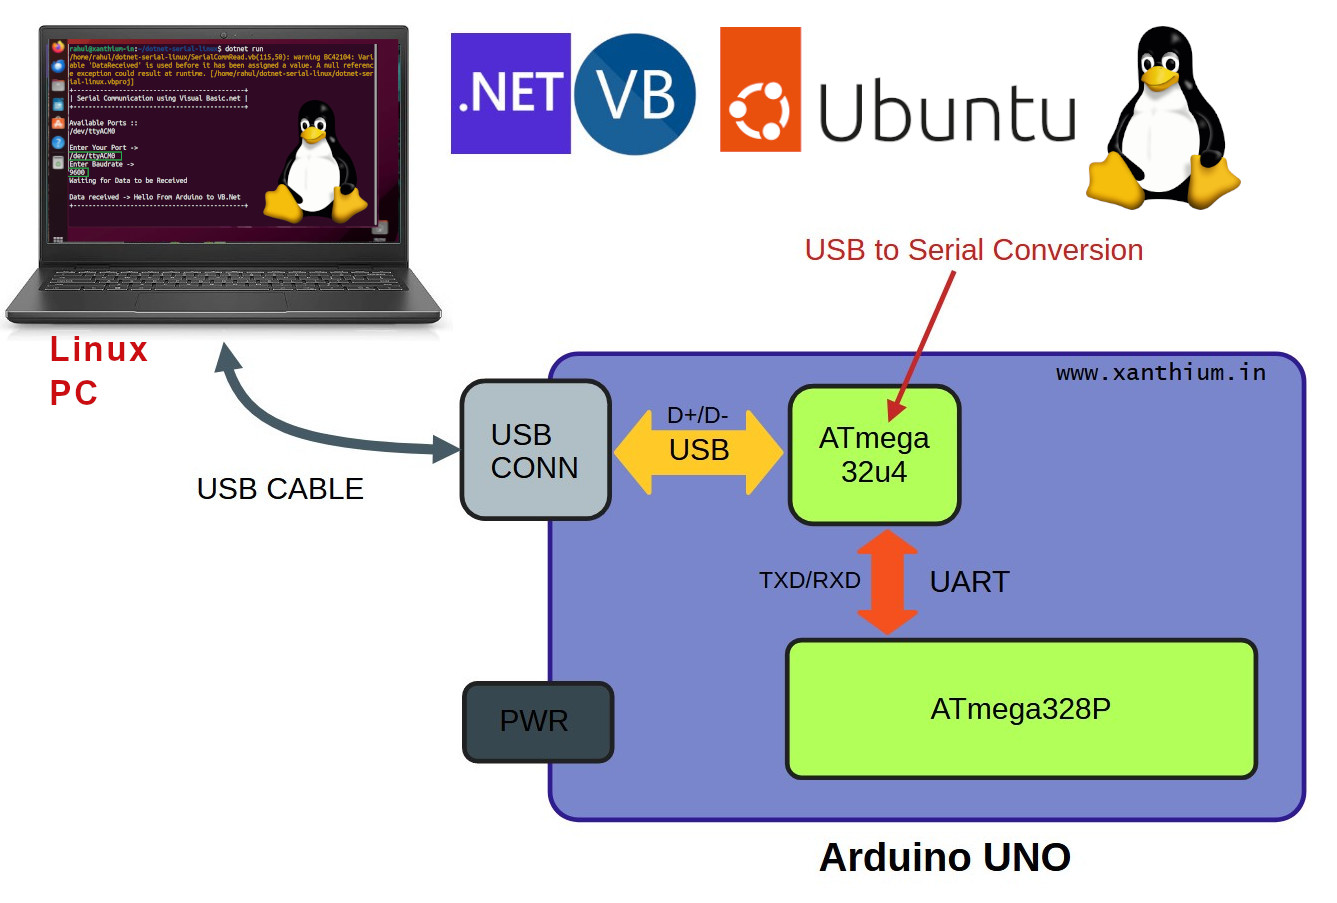 serial communication example between linux PC and Arduino using Visual basic.net (vb.net) on dotnet net platform